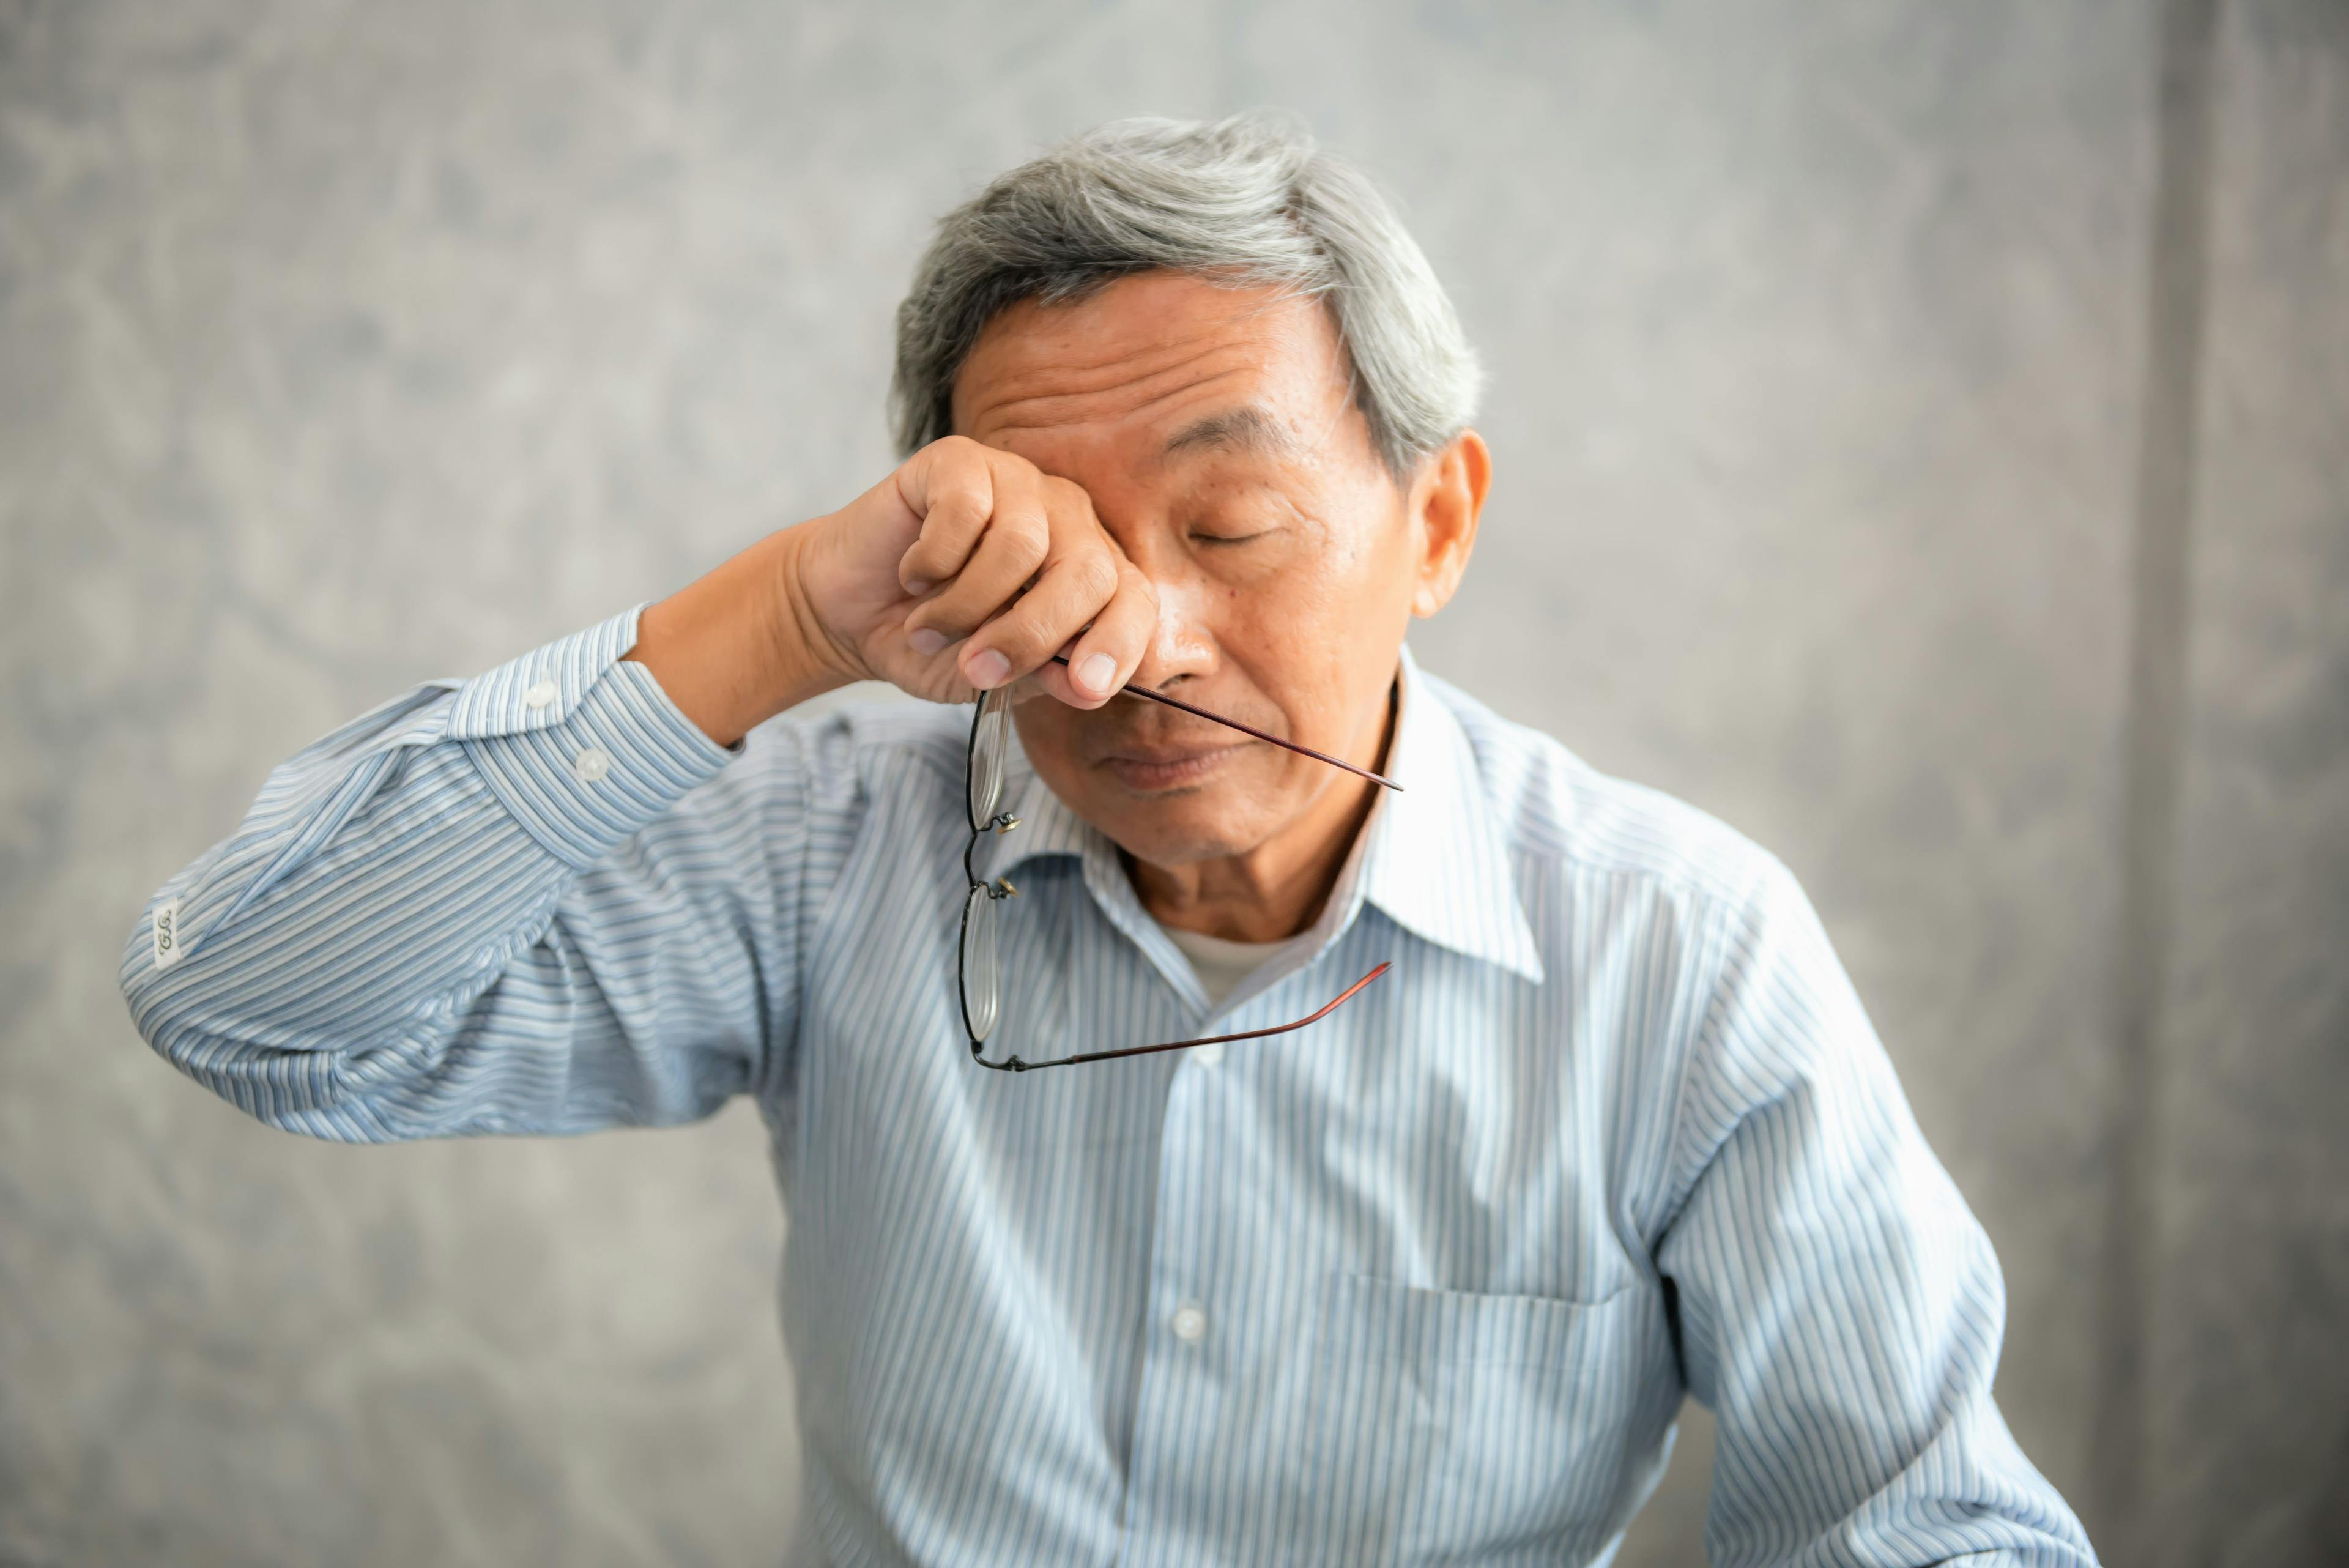 Older man rubbing eyes | Image credit: Maha Heang 245789 - stock.adobe.com